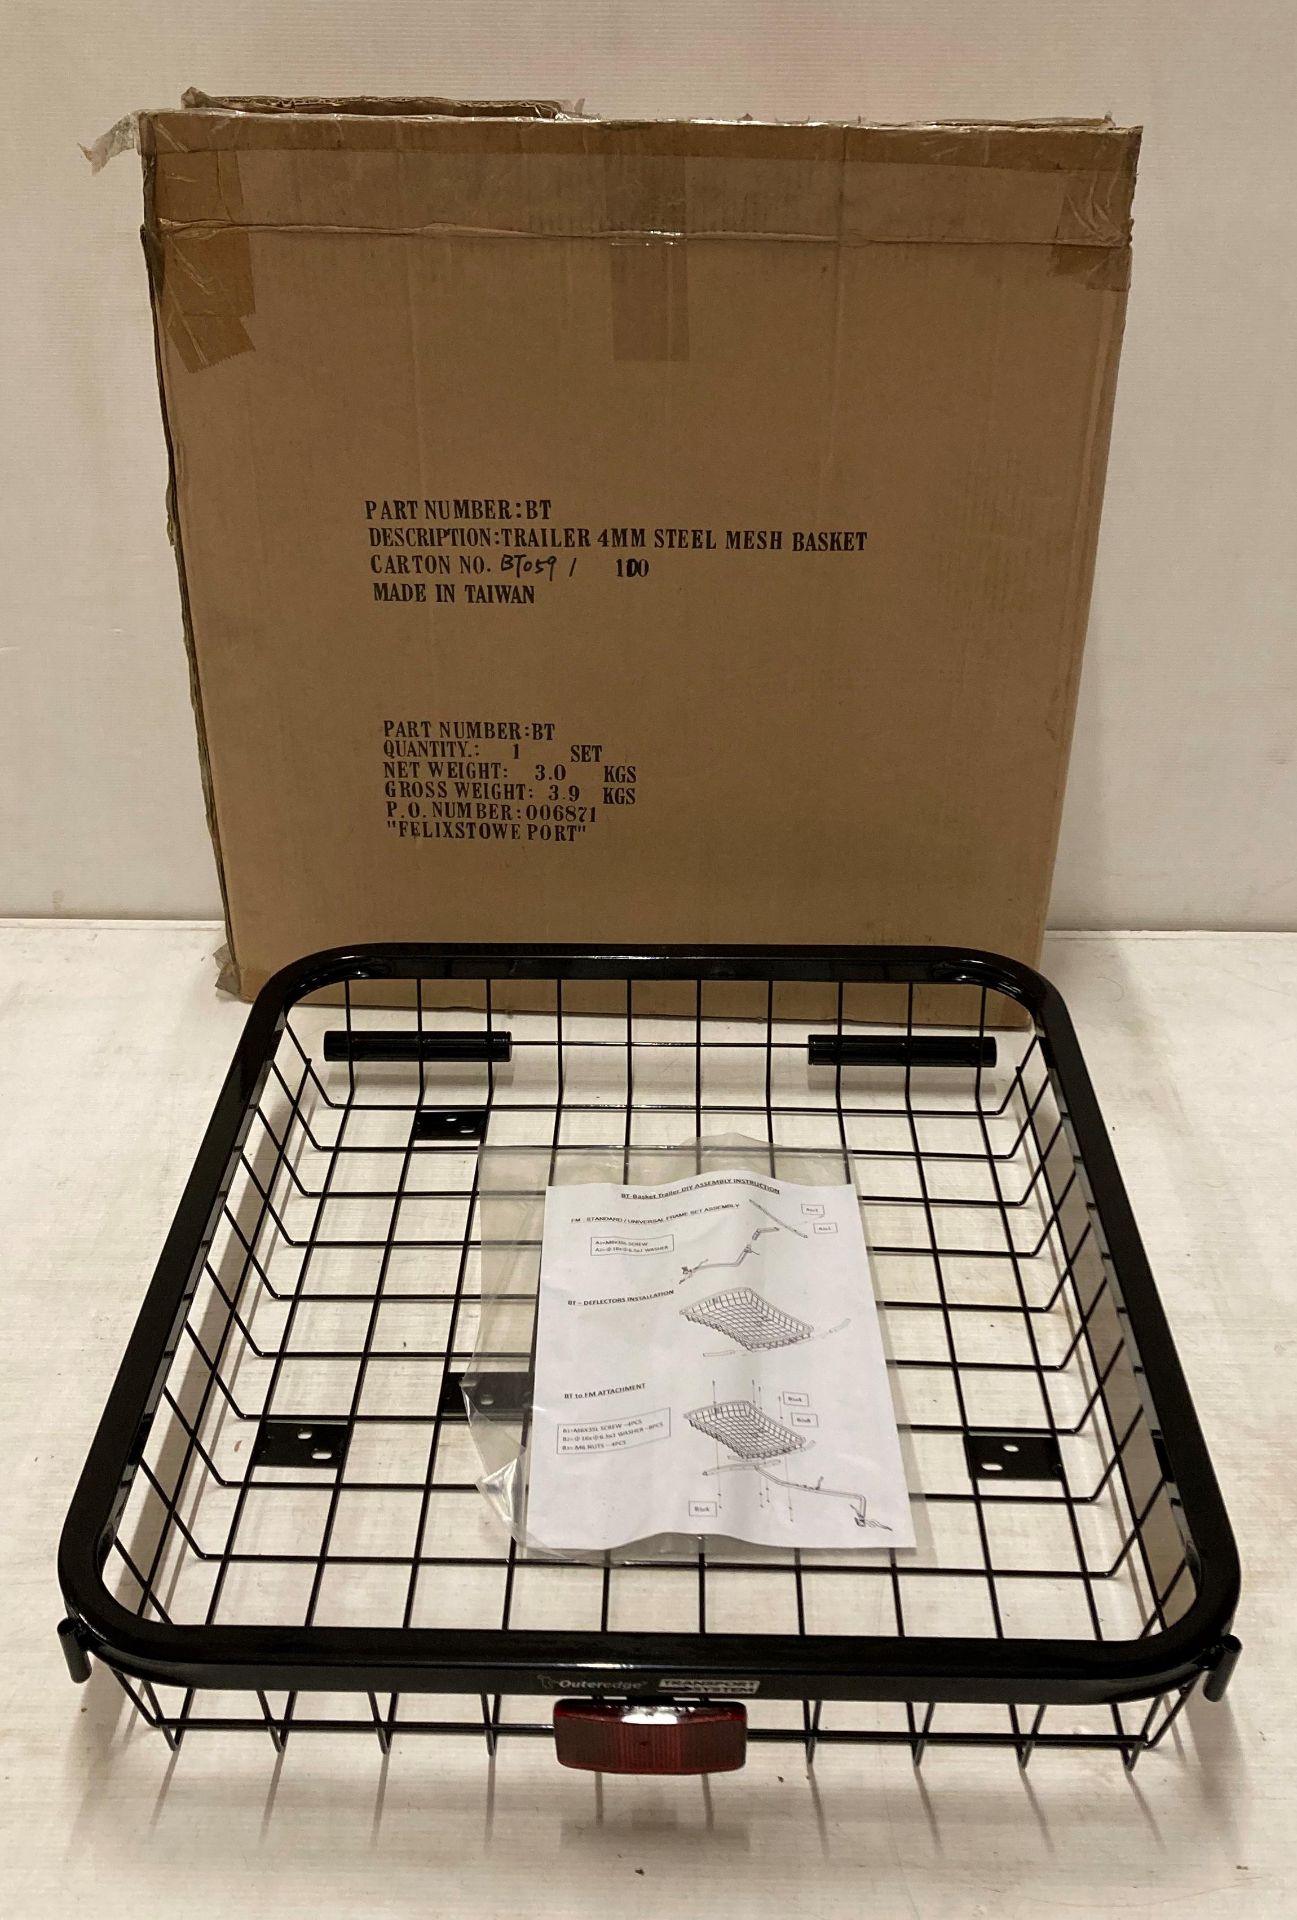 Trailer 4mm steel mesh basket (saleroom location: M05)